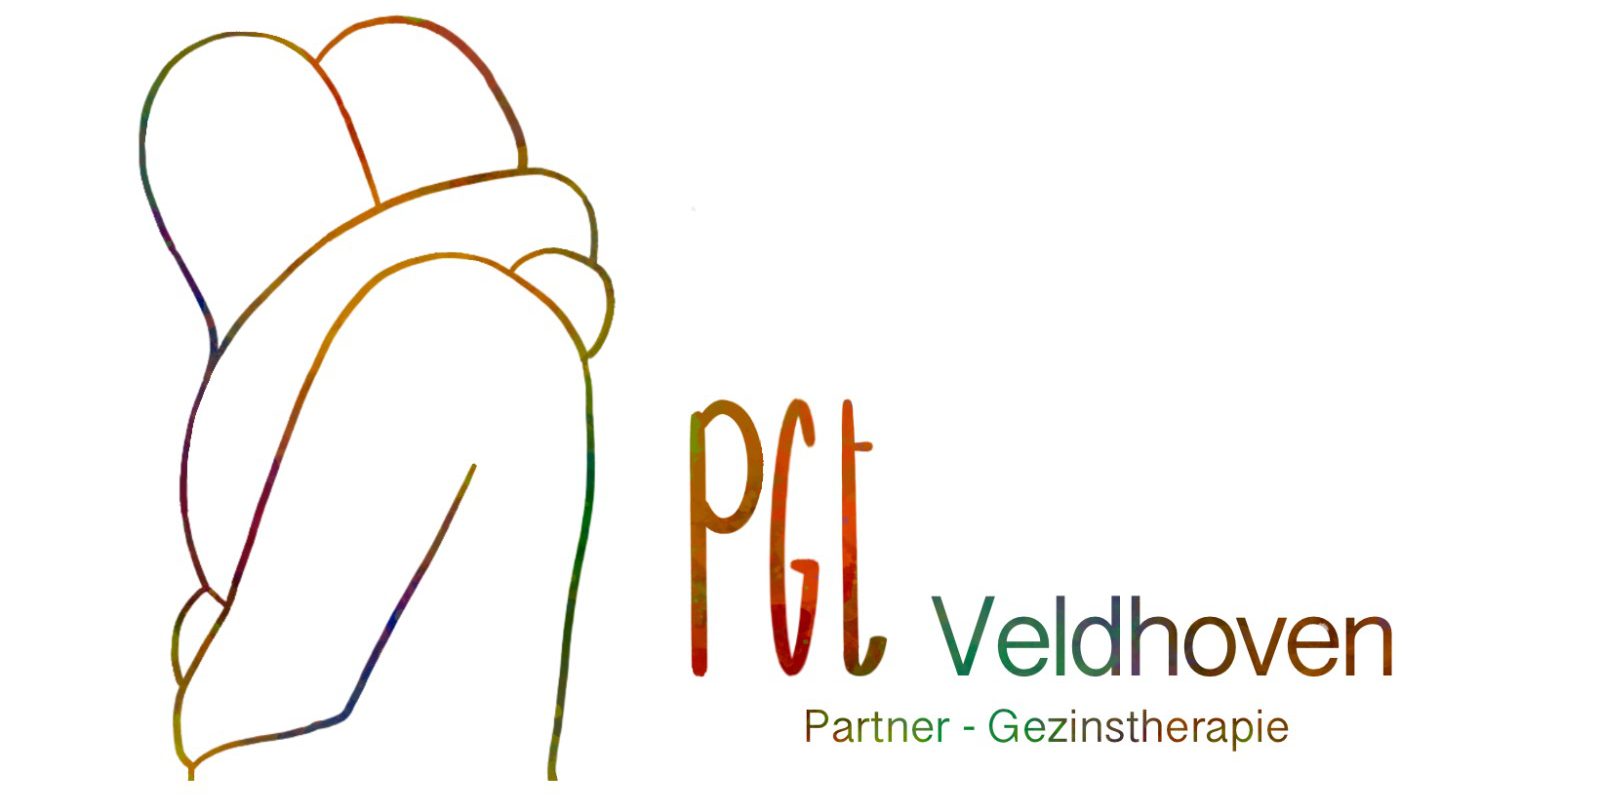 PGT logo